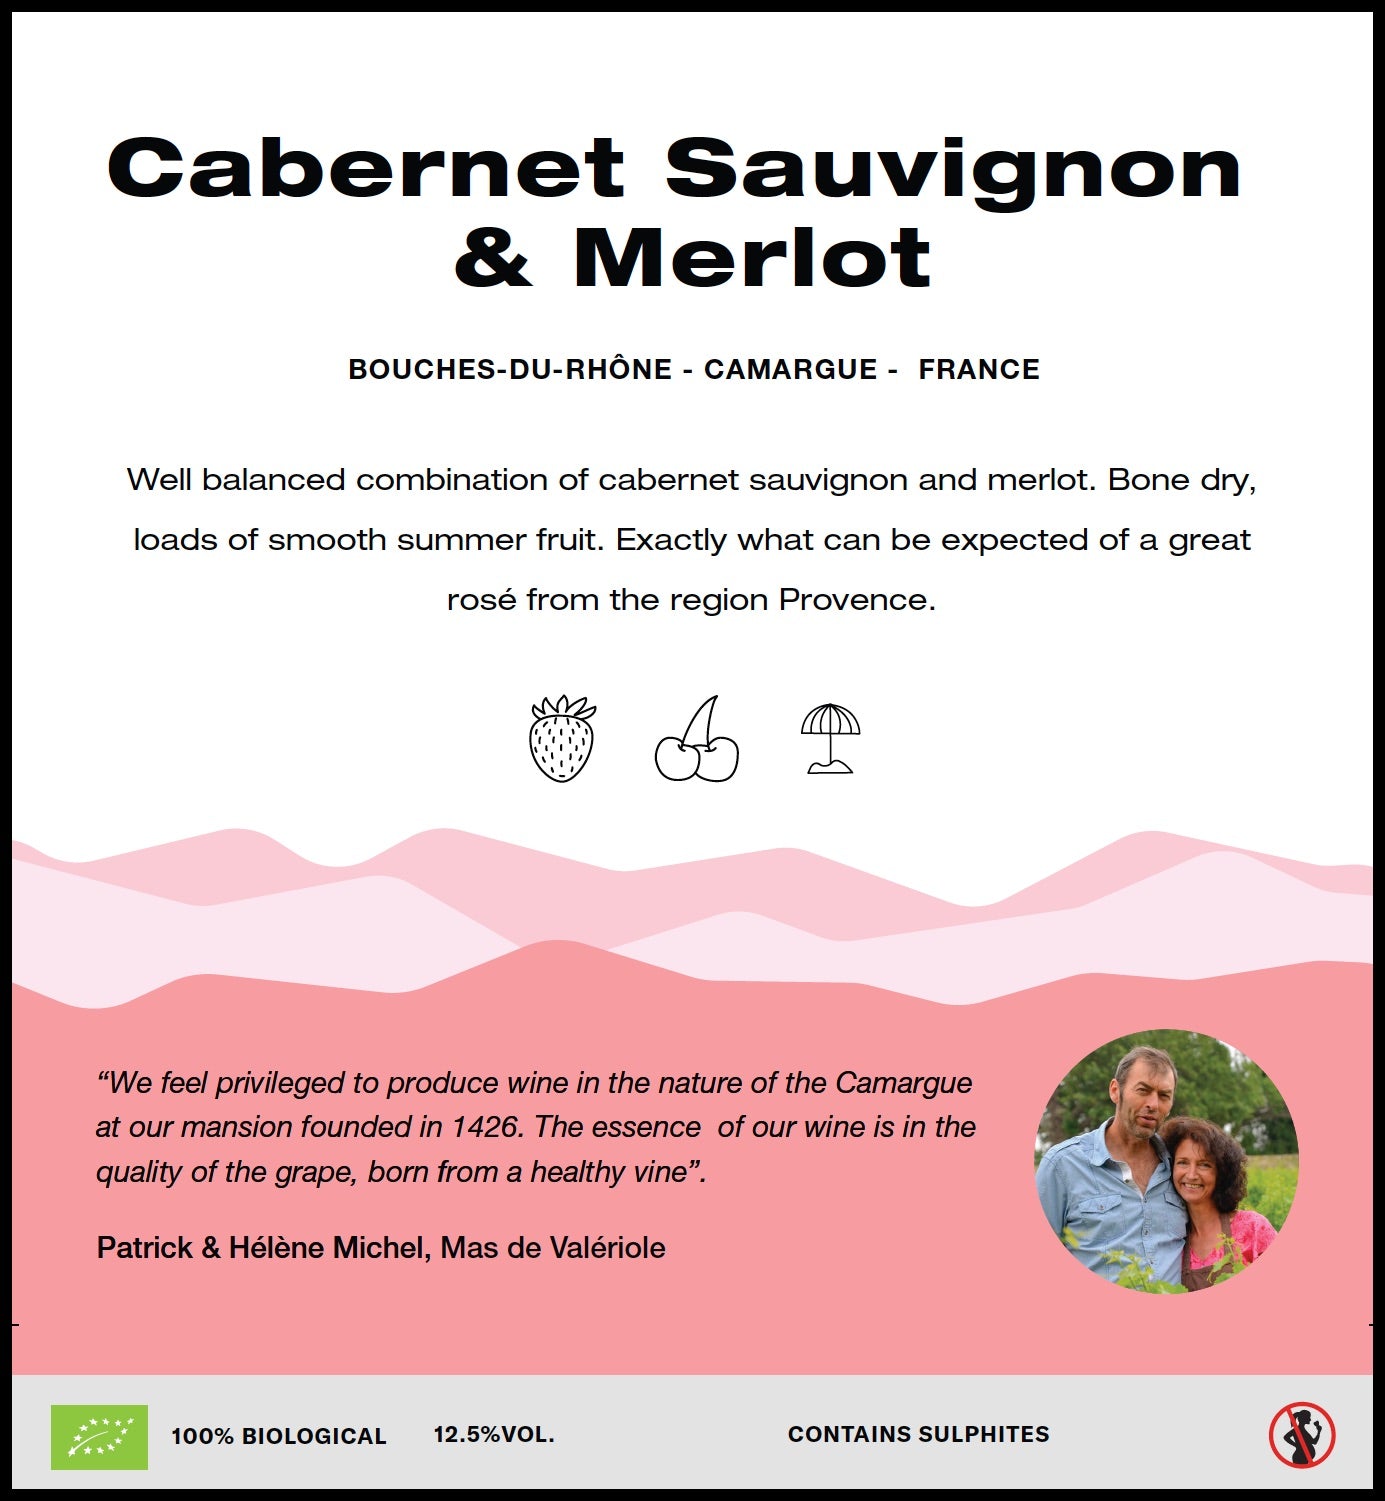 Cabernet sauvignon & Merlot (Camargue)